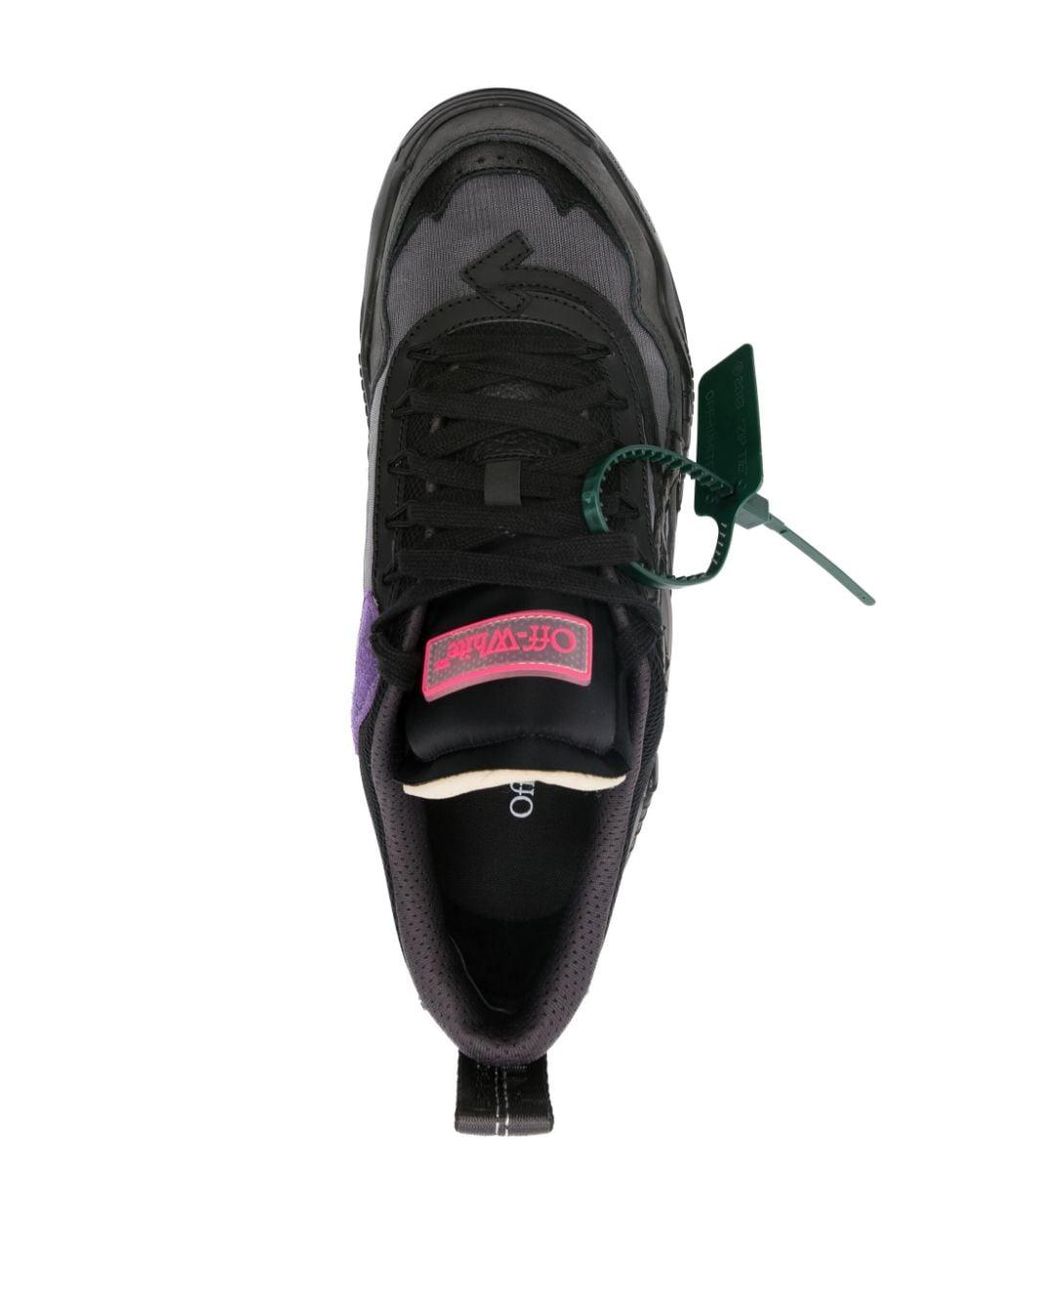 Off-White Virgil Abloh Odsy-1000 Men's Sneakers Size 7 US/ 40 EU Black